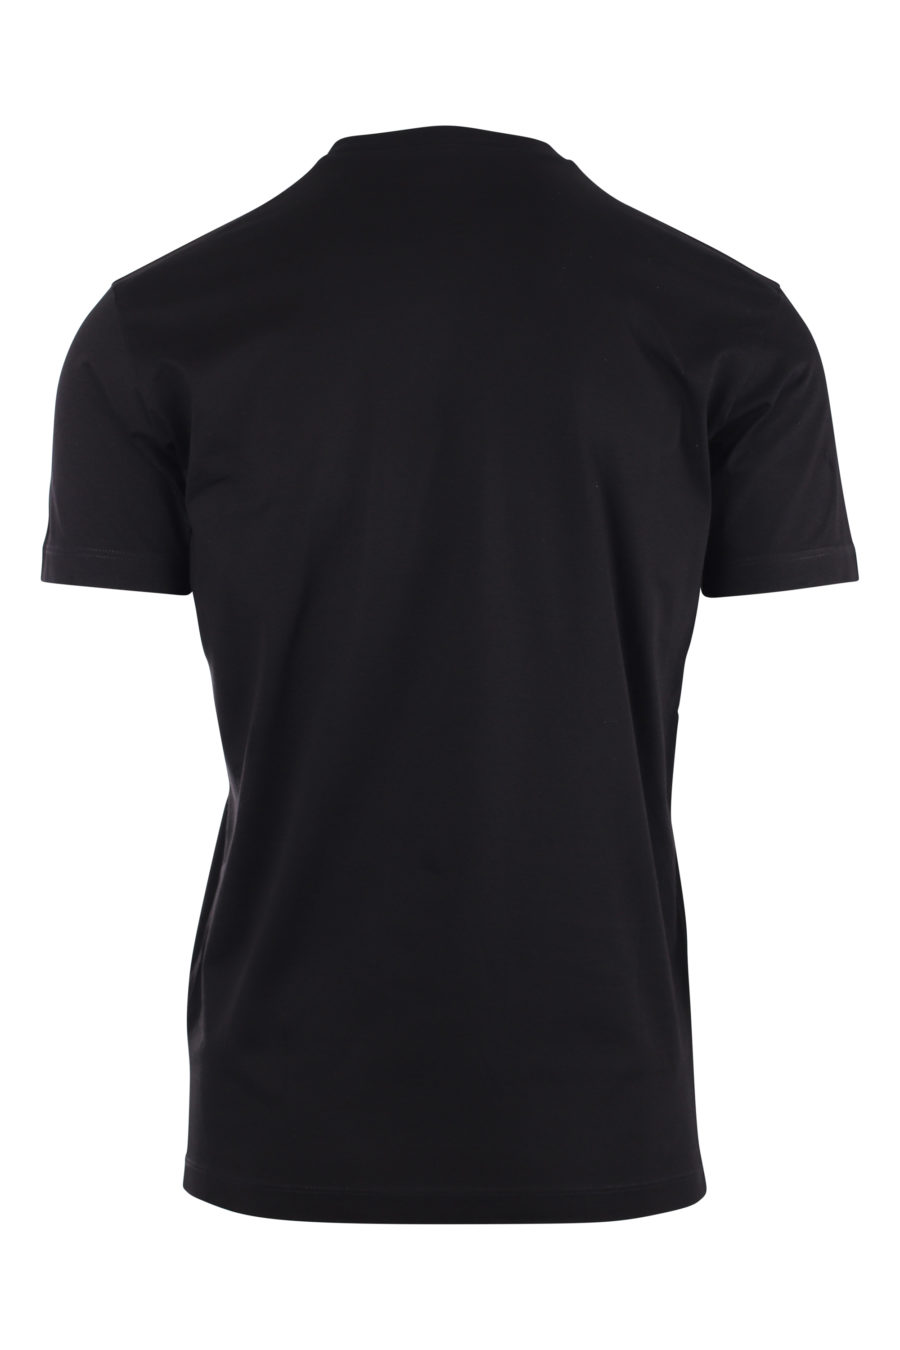 T-shirt preta com pequeno logótipo ceresio 9 - IMG 9730